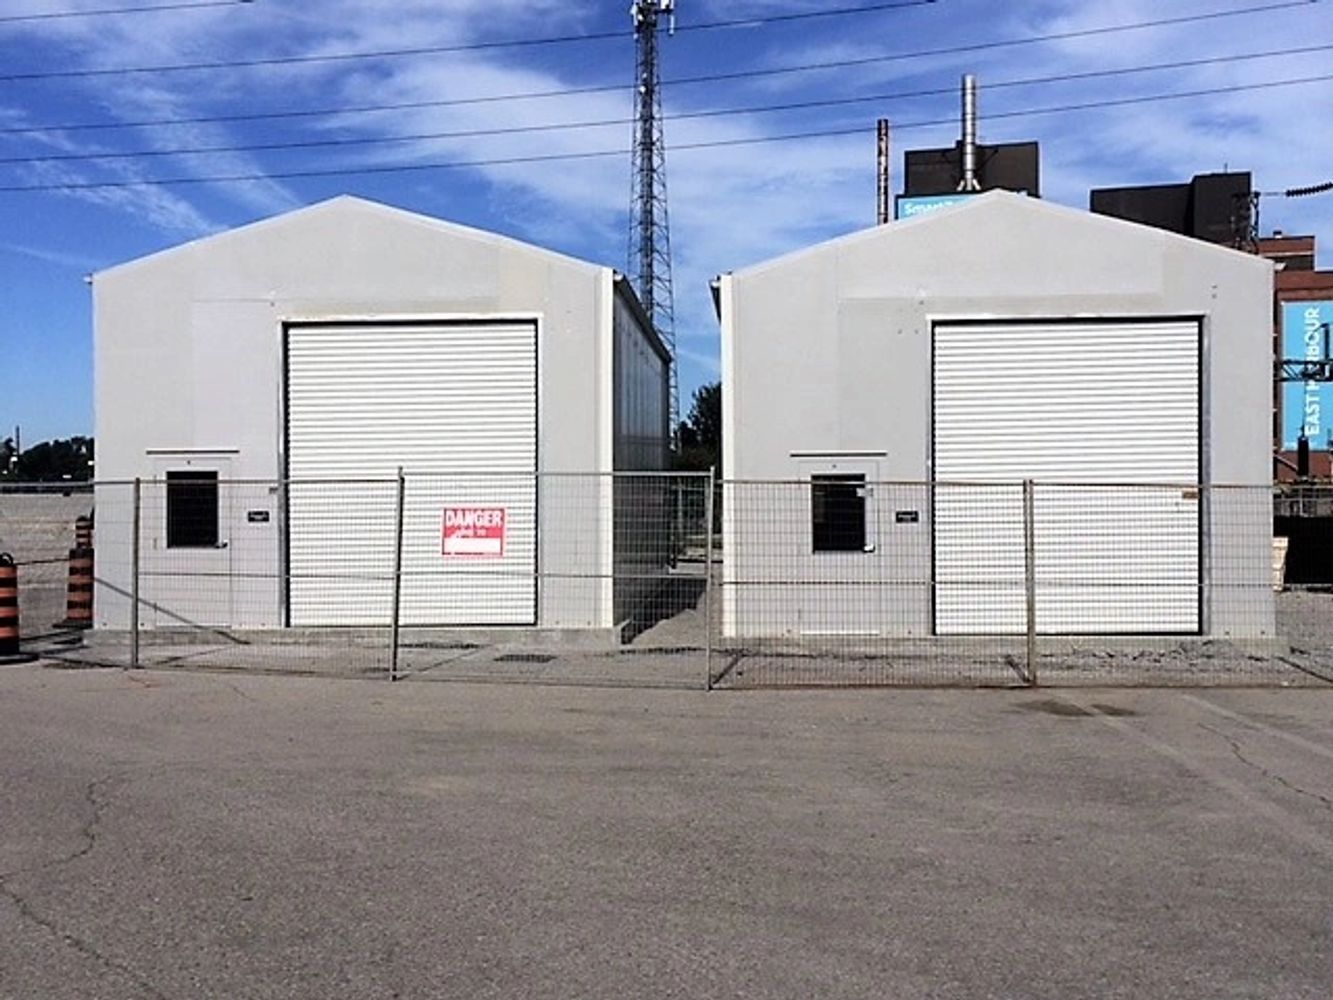 Canadian Manufacturing, RM Products Ltd. Modular Fiberglass Enclosures. Dock level storage
Warehouse